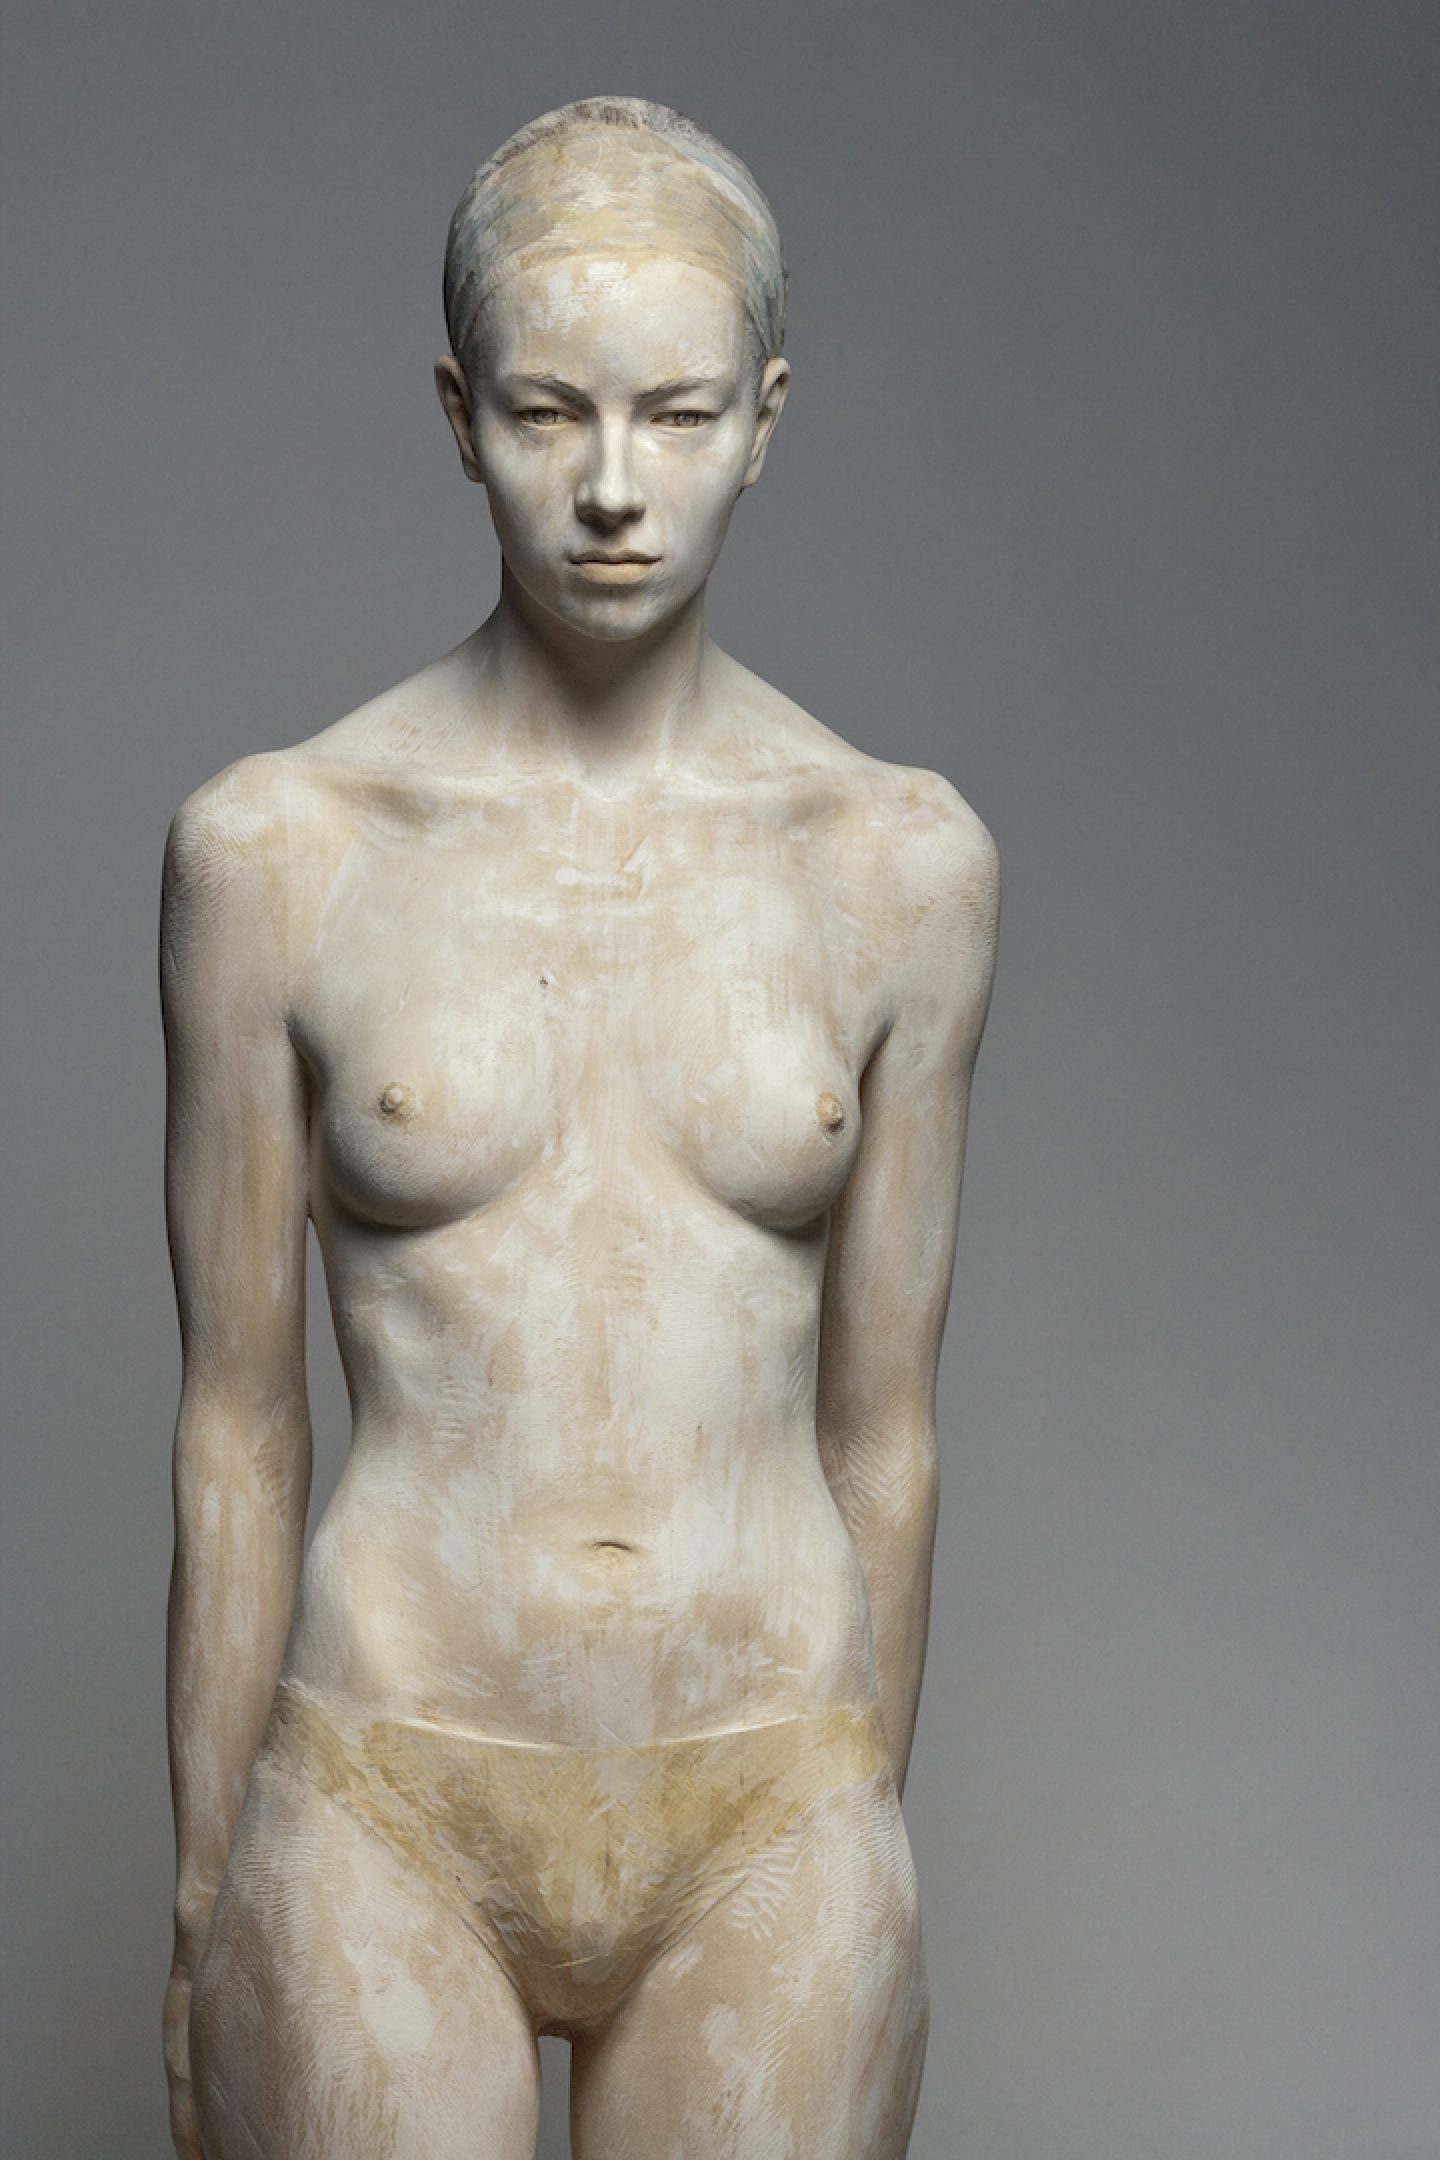 Human Sculptures By Bruno Walpoth IGNANT